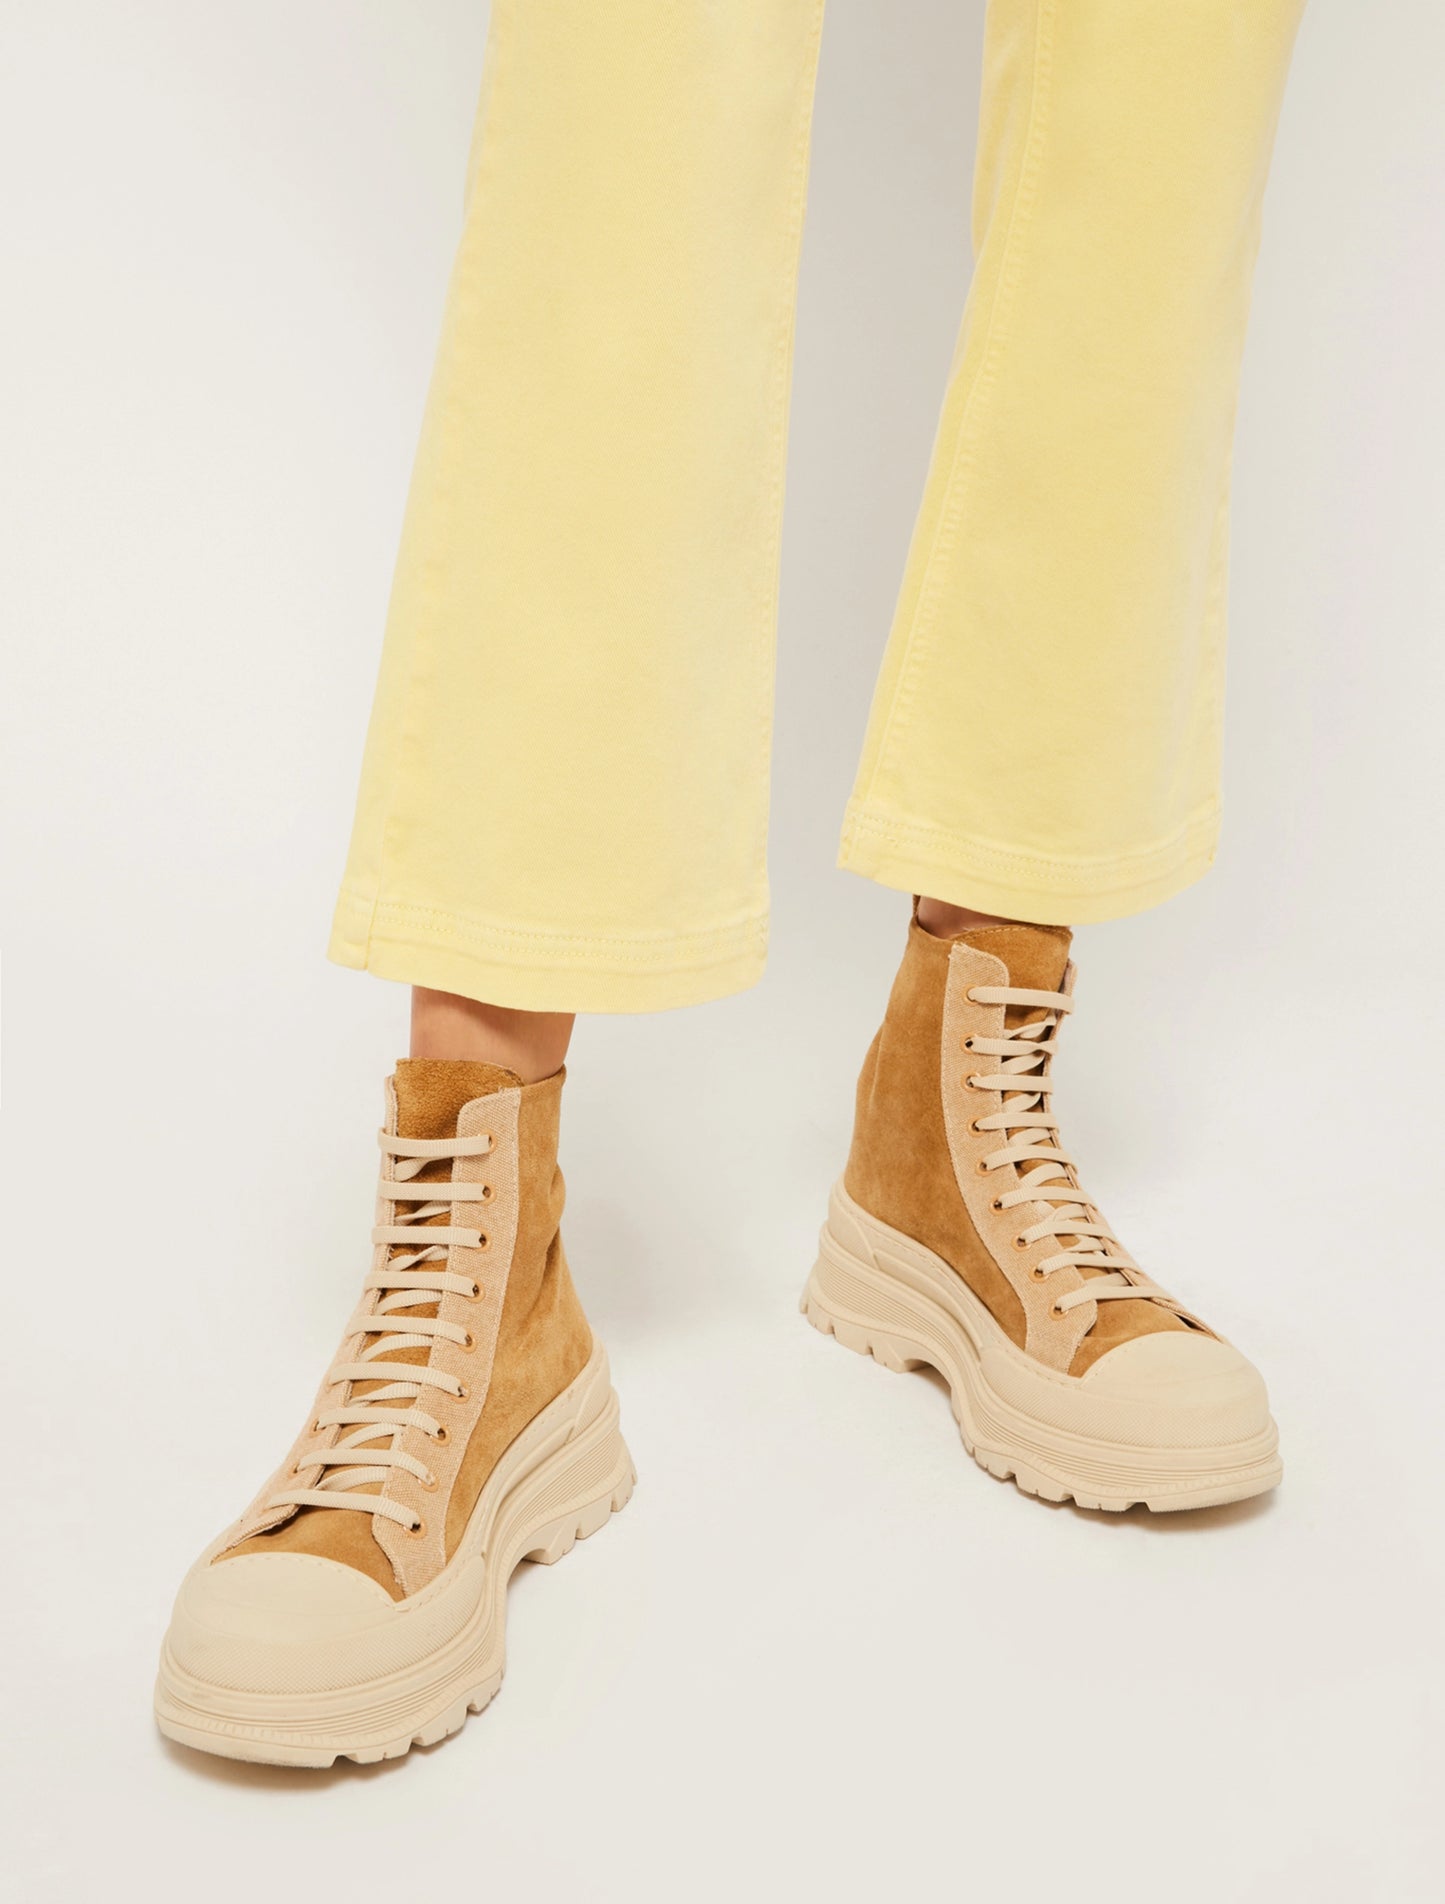 Penny Black | Rivolo cotton kick-flare trousers - Sunshine yellow